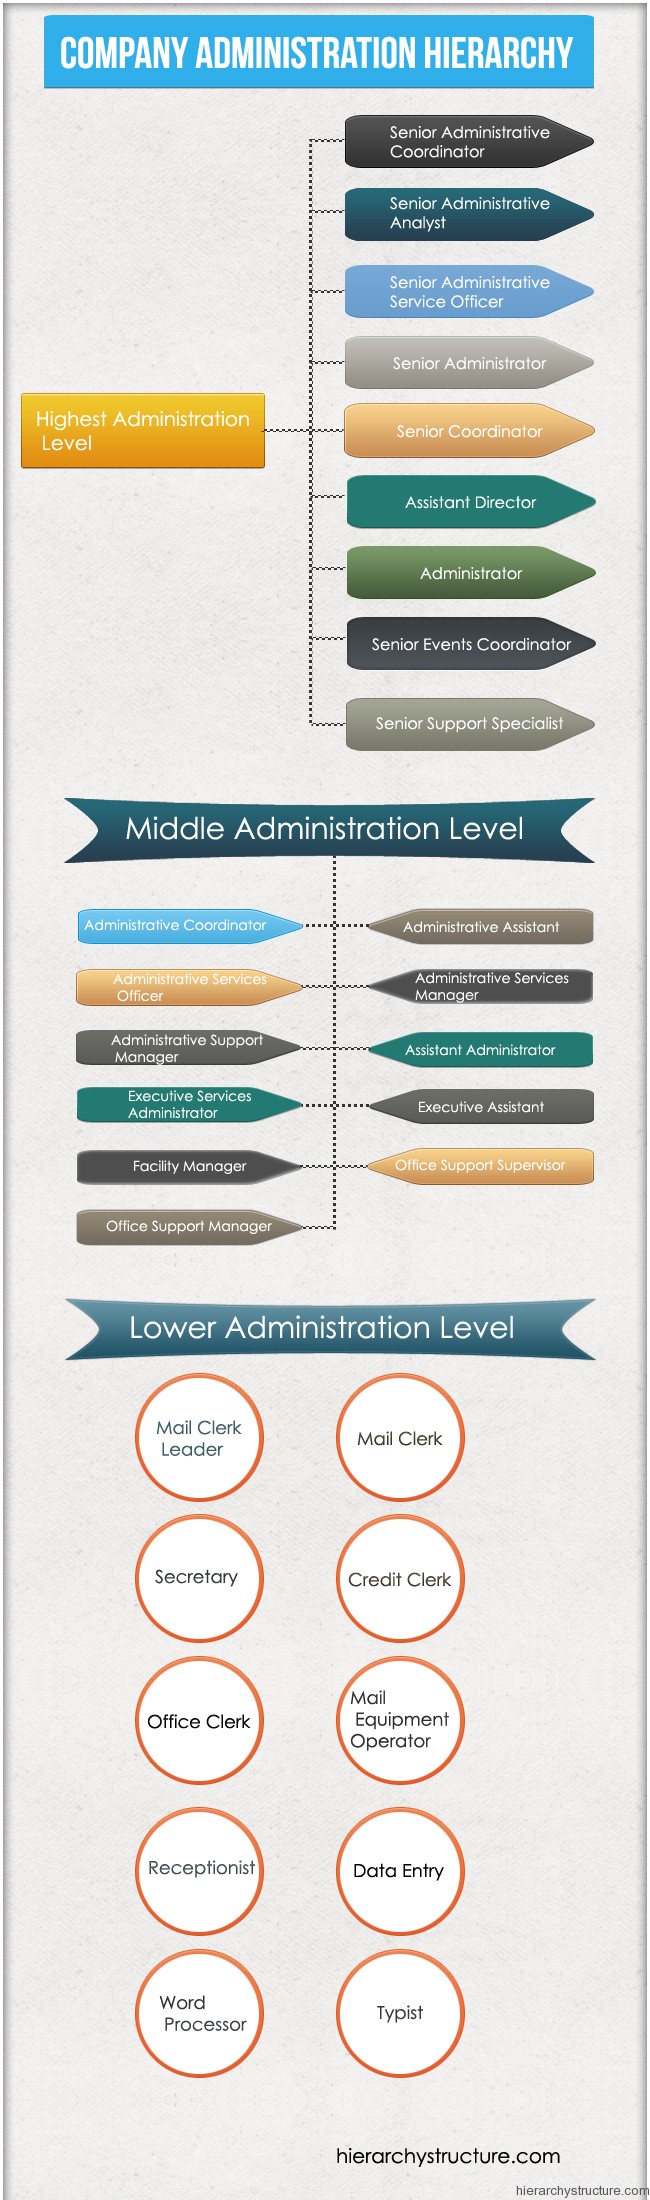 Company Administration Hierarchy